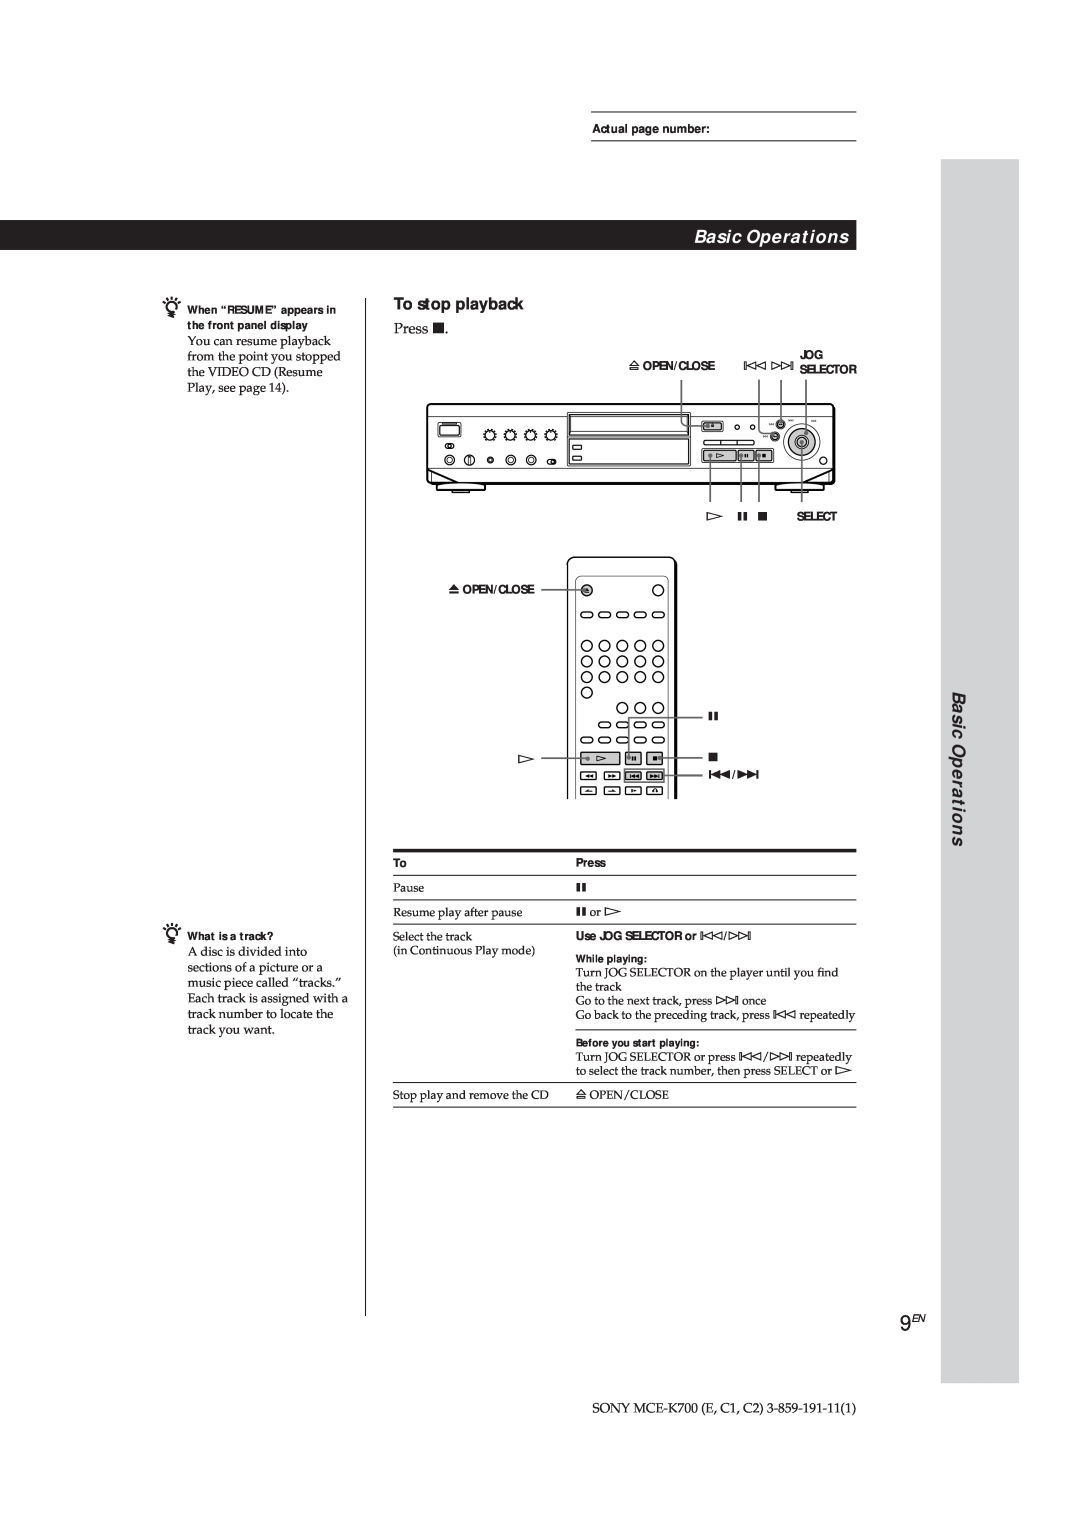 Sony MCE-K700 manual To stop playback, Basic Operations, Press, á P p 